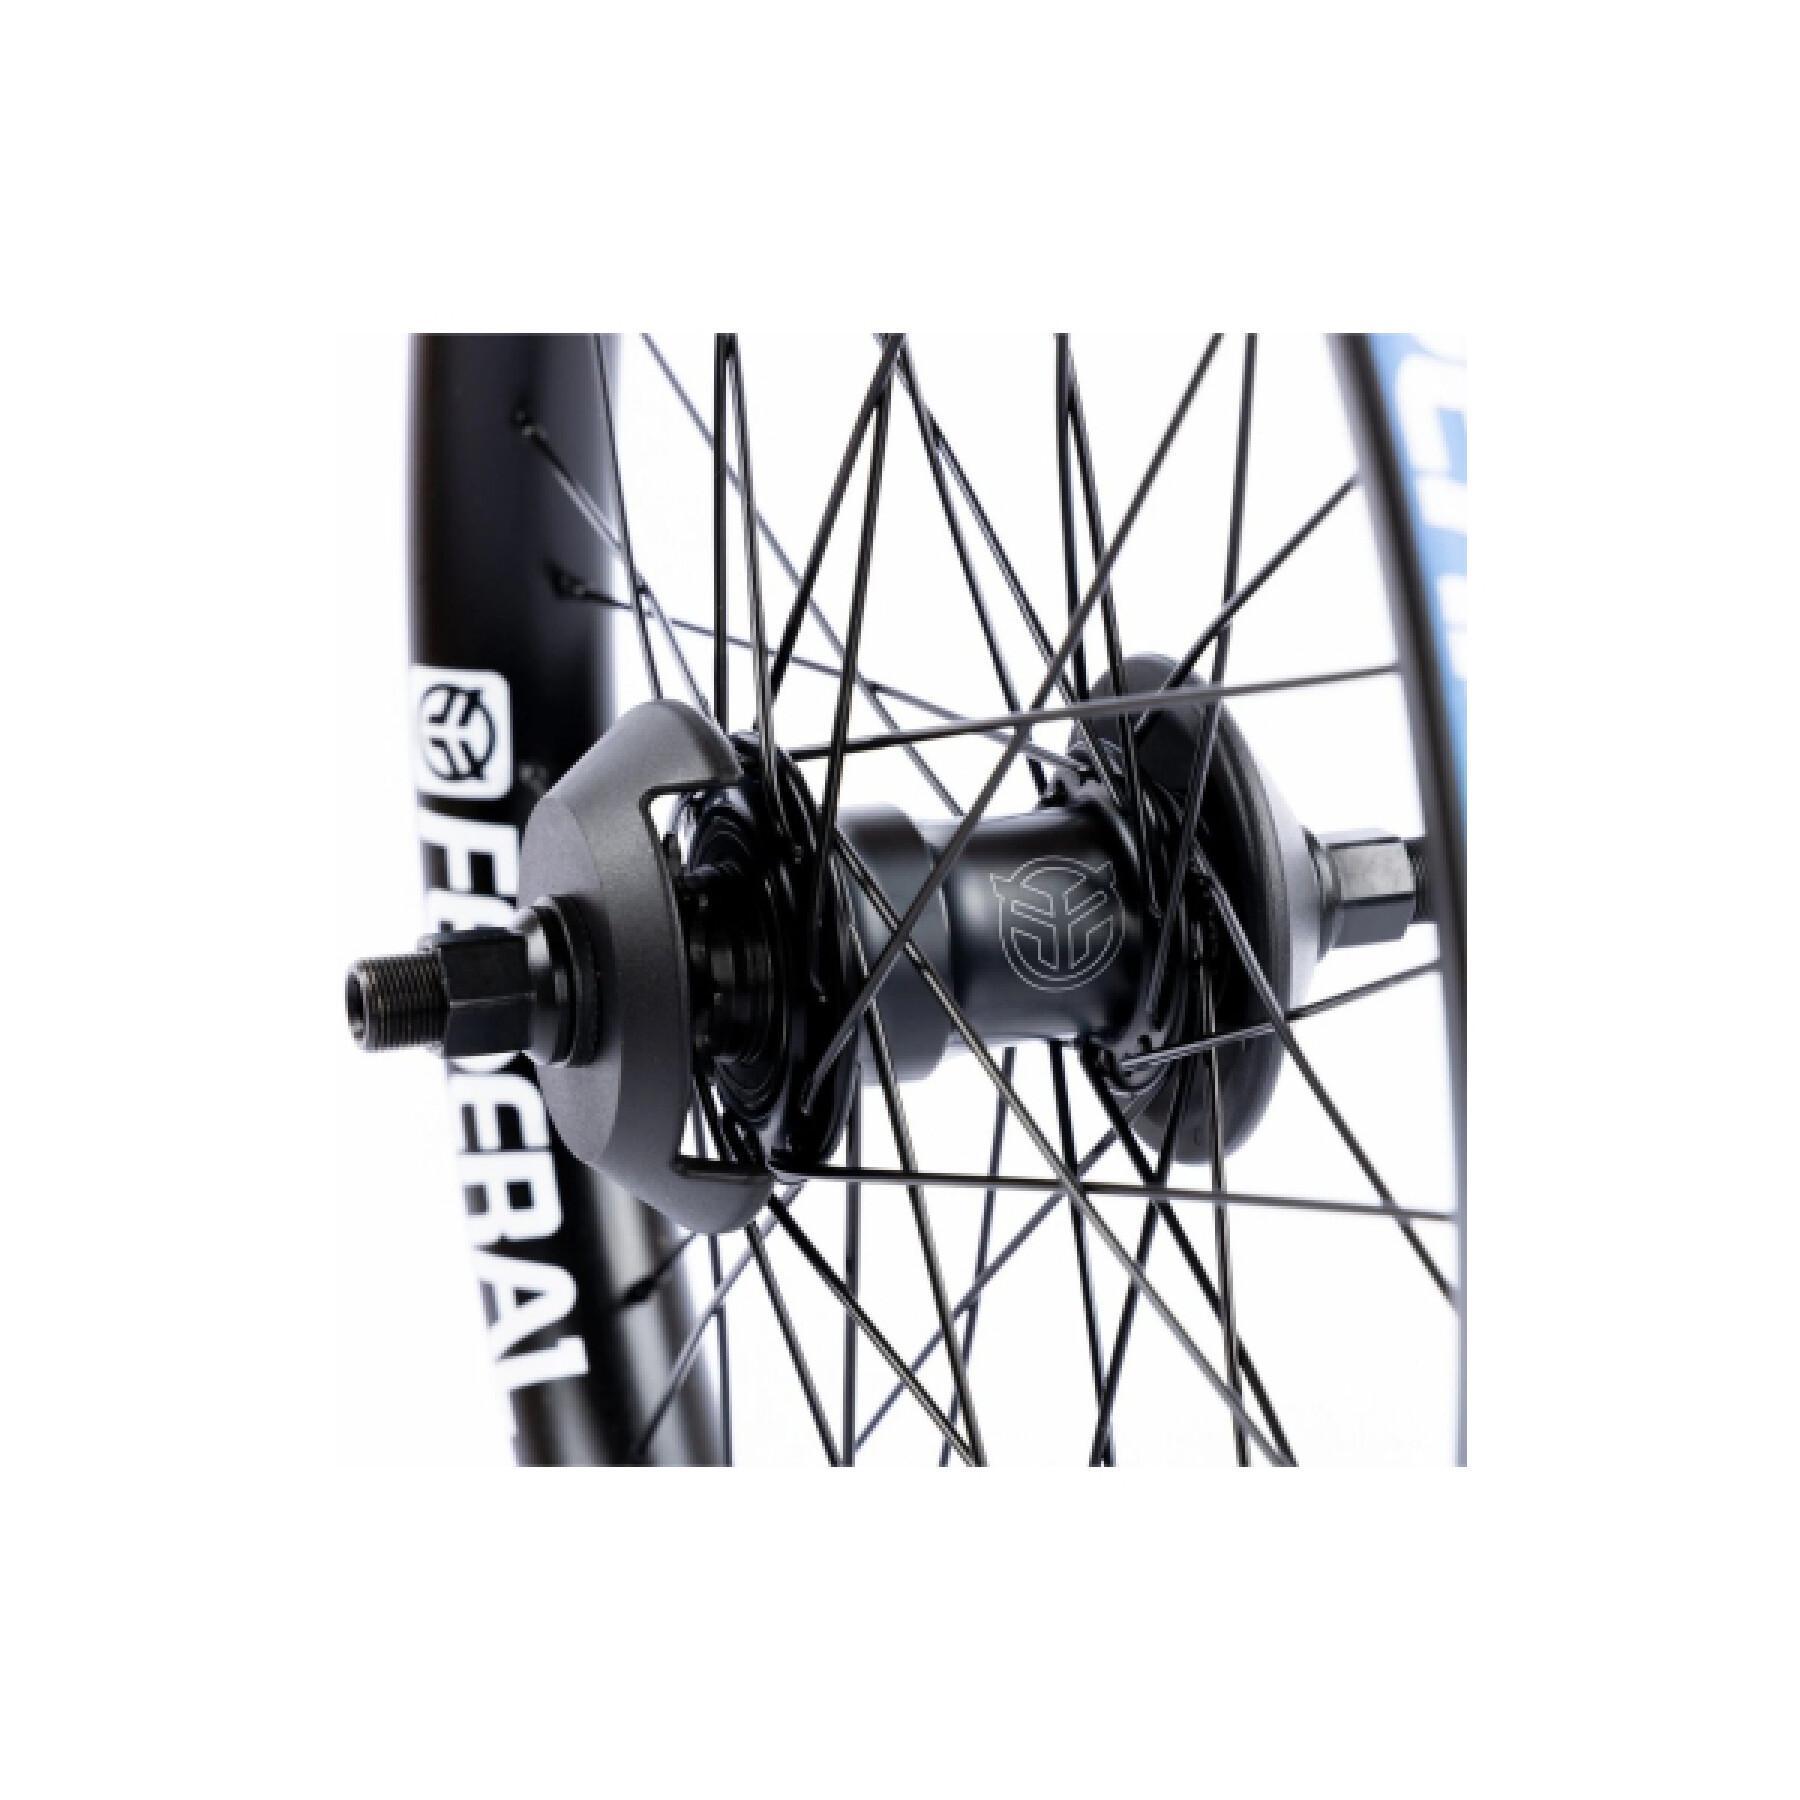 Bicycle rear wheel Federal Freecoaster Motion Rhd Stance Aero